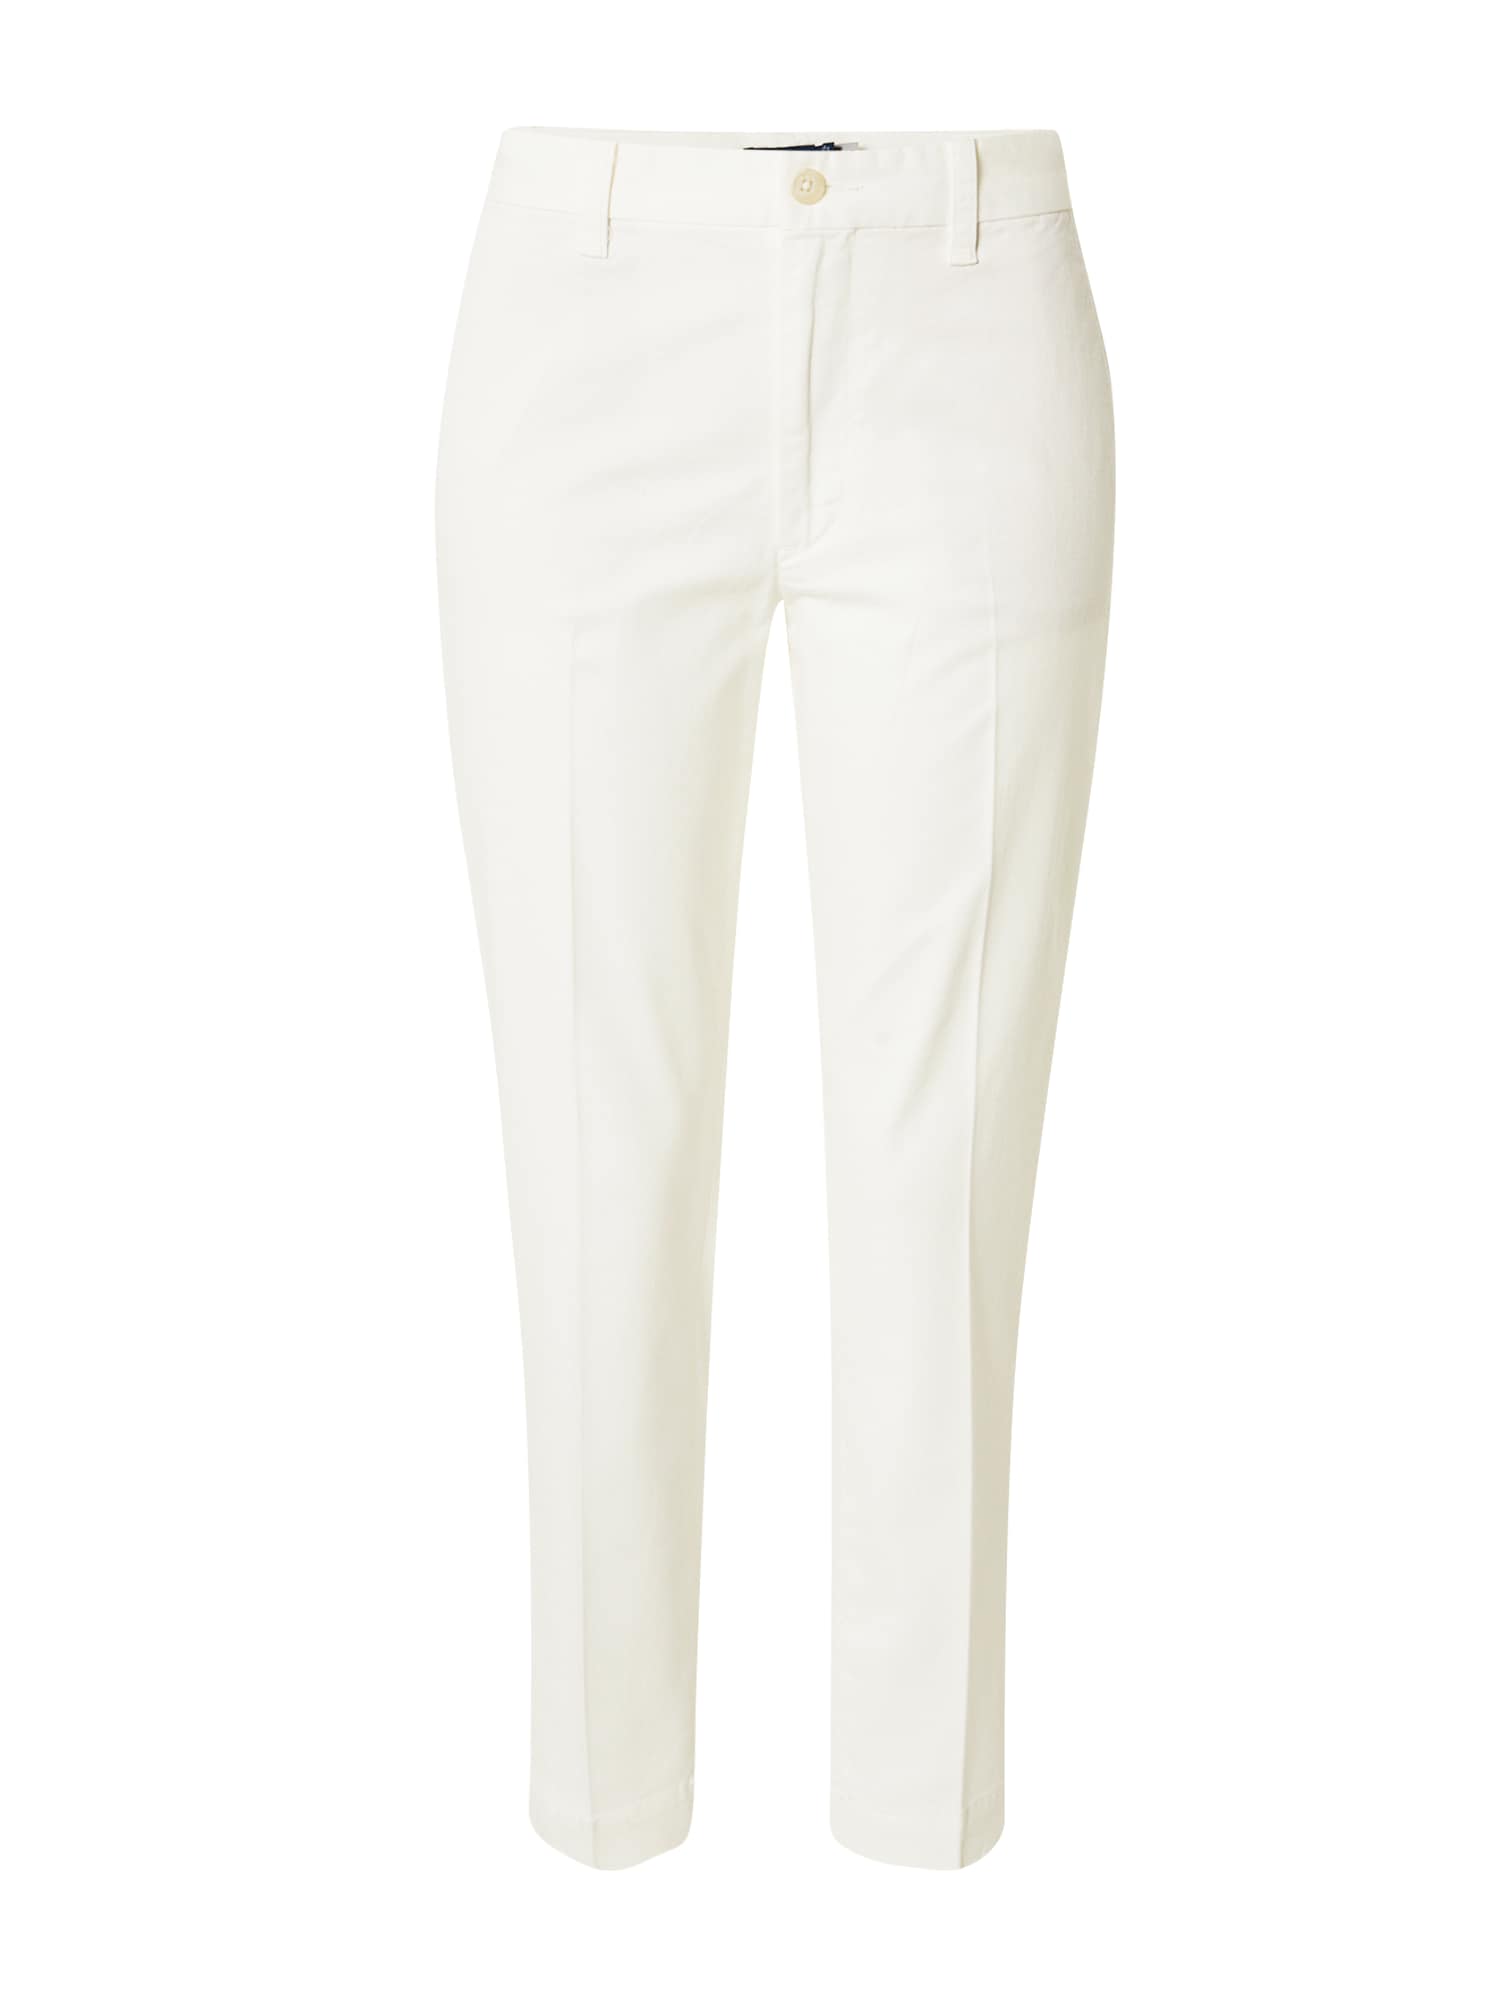 Polo Ralph Lauren Chino nohavice  prírodná biela